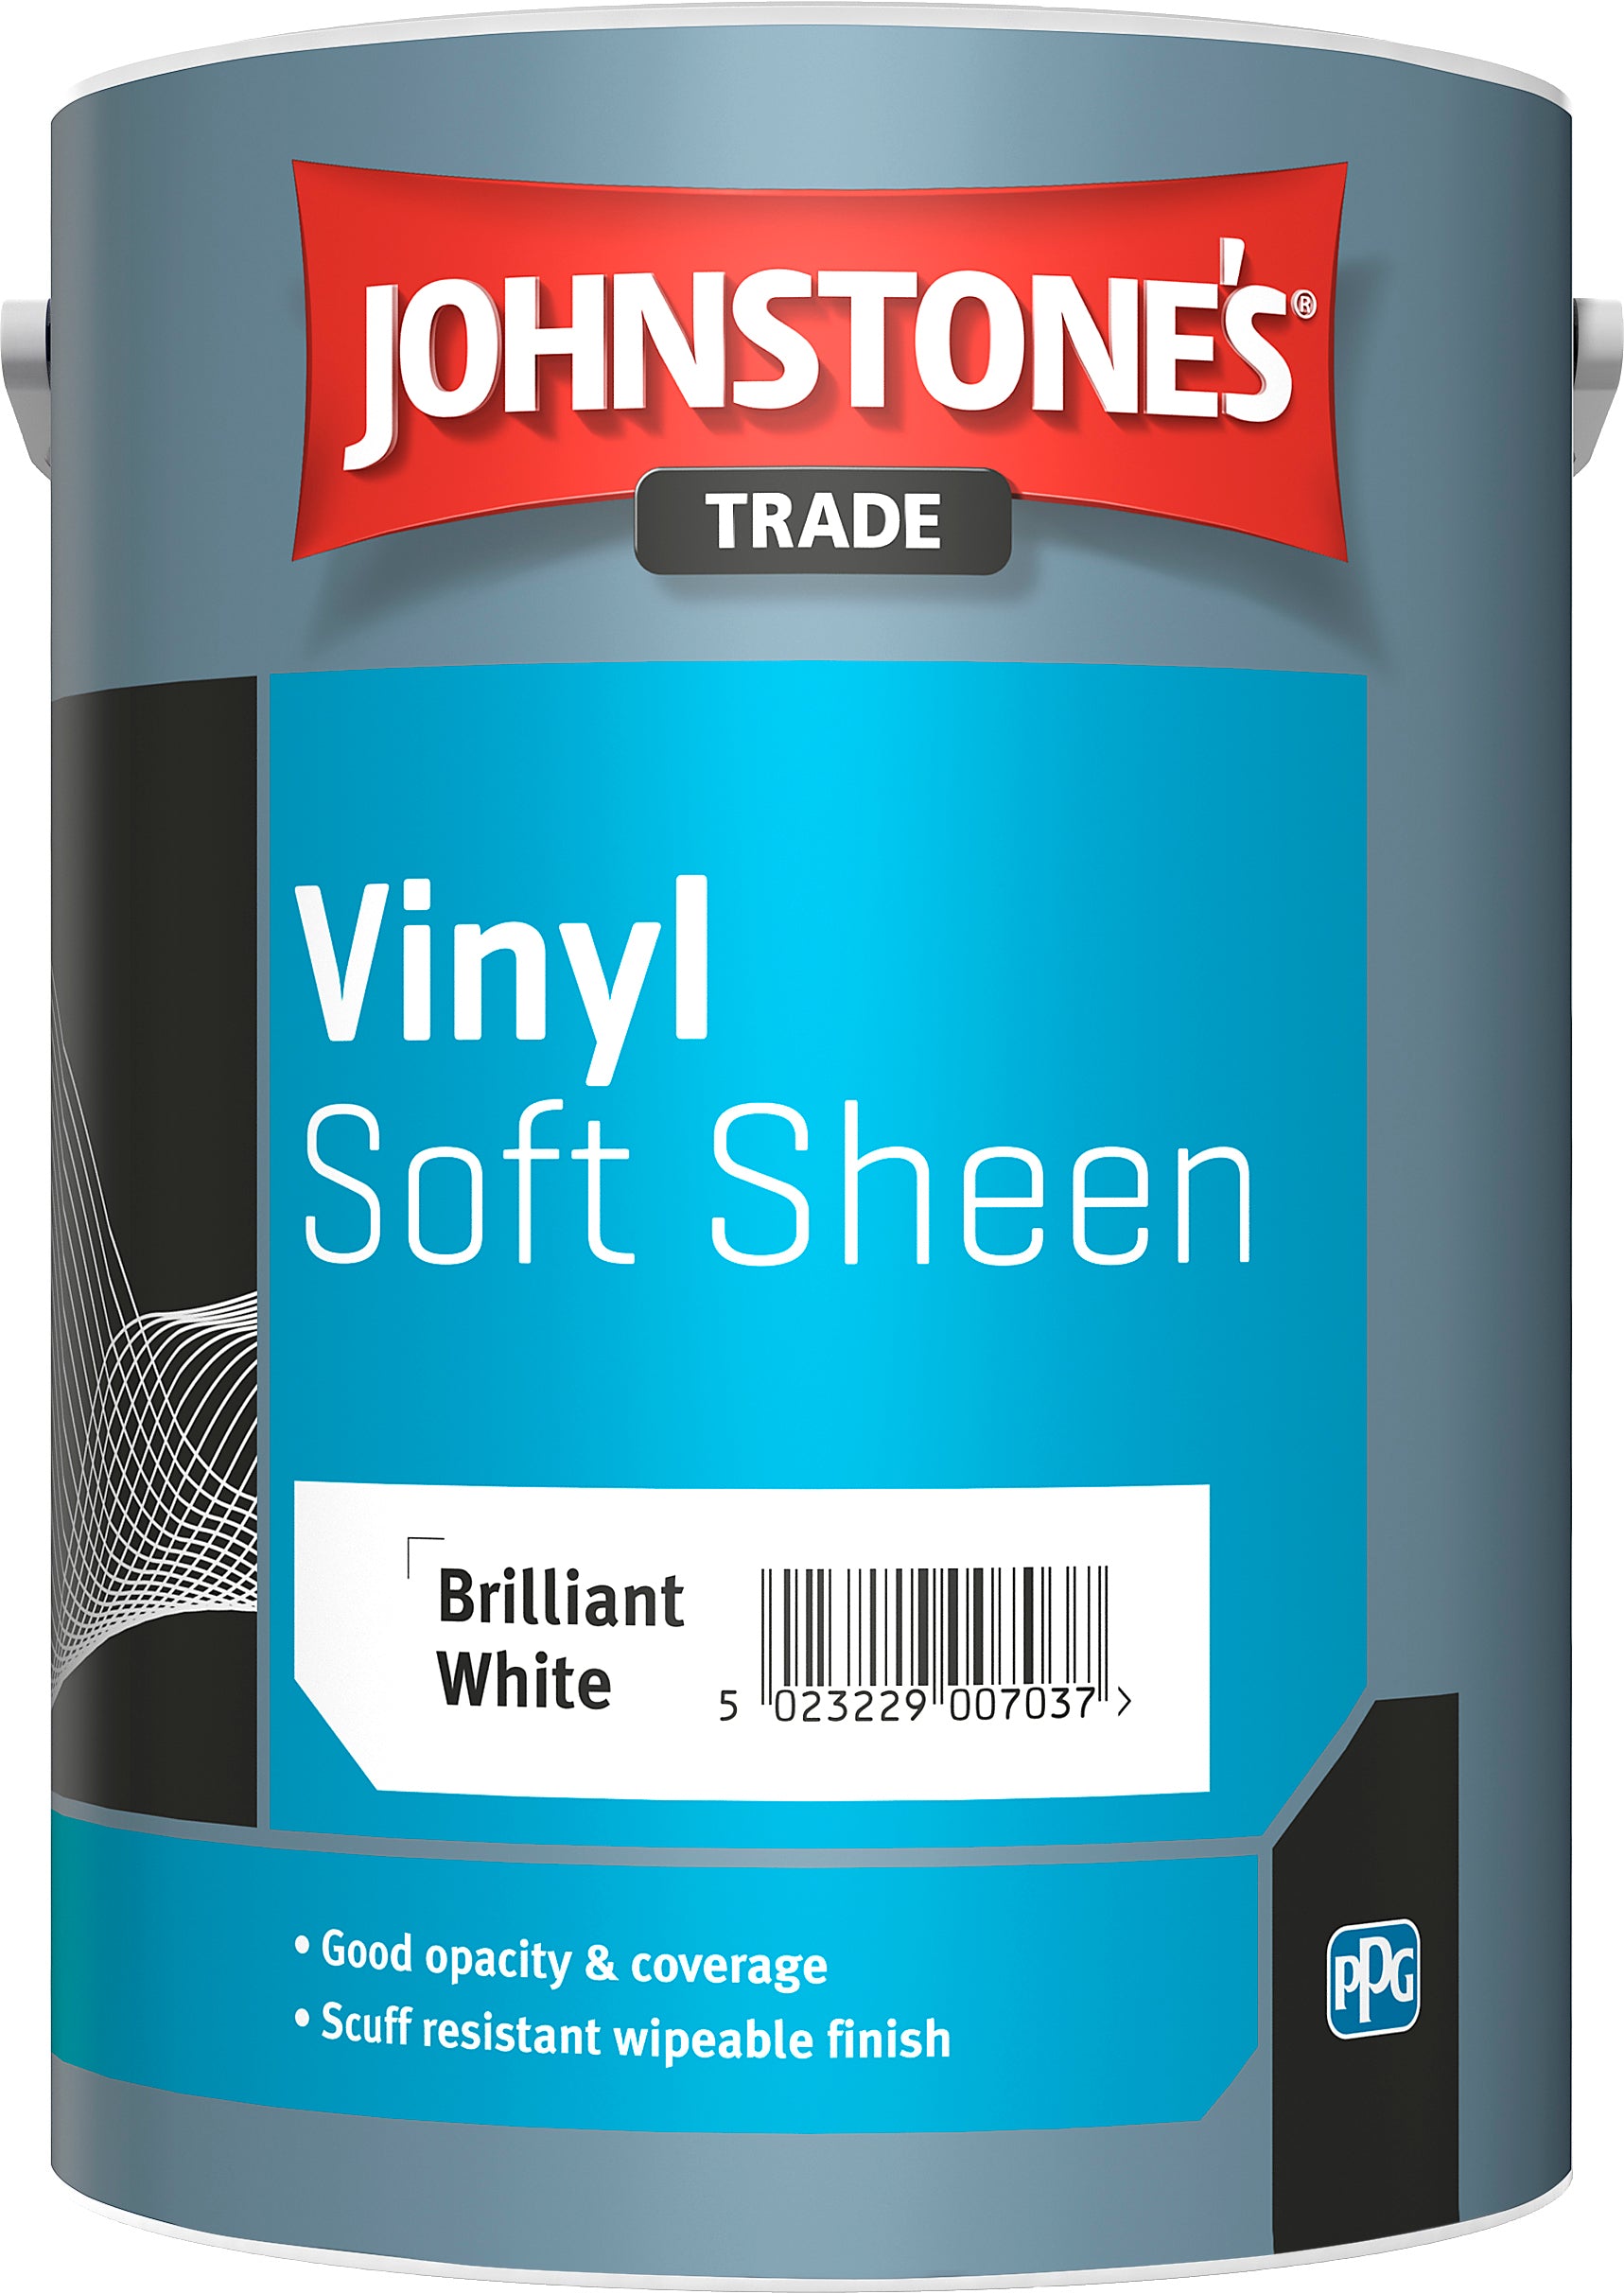 Johnstones Vinyl Soft Sheen - Brilliant White